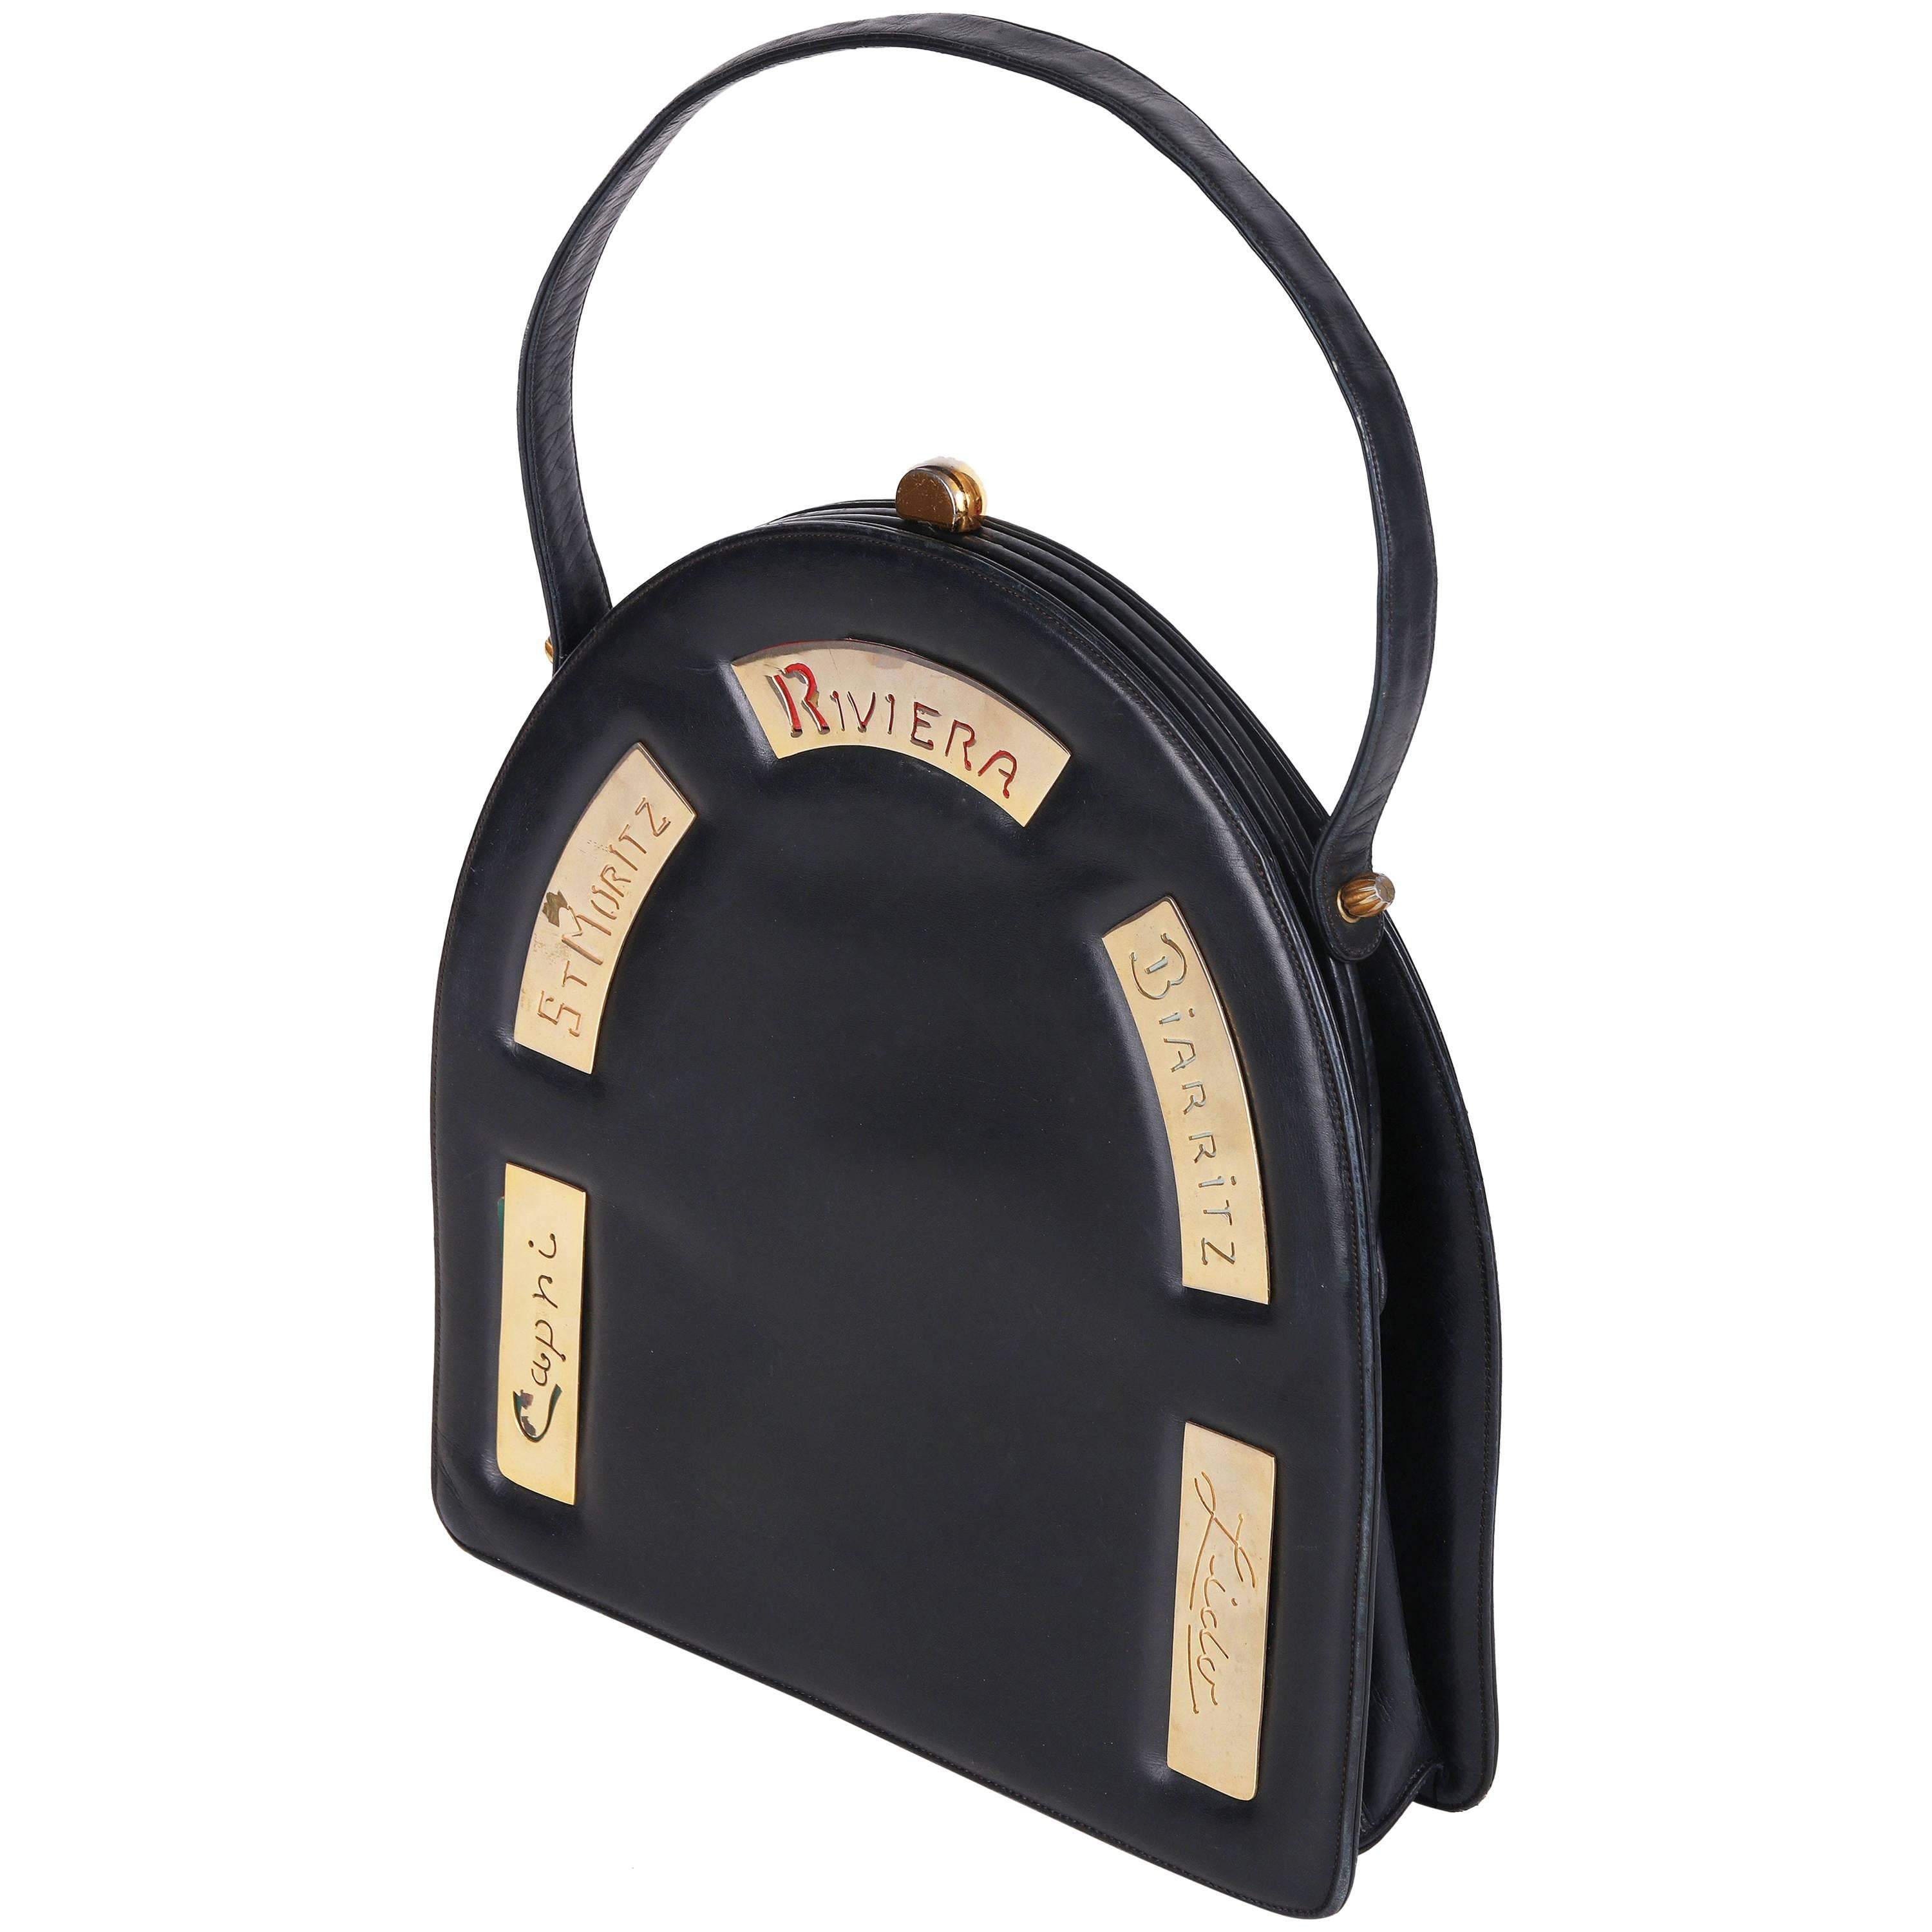 Prestige Black Leather Destination Arched Handbag with City Names, 1960s